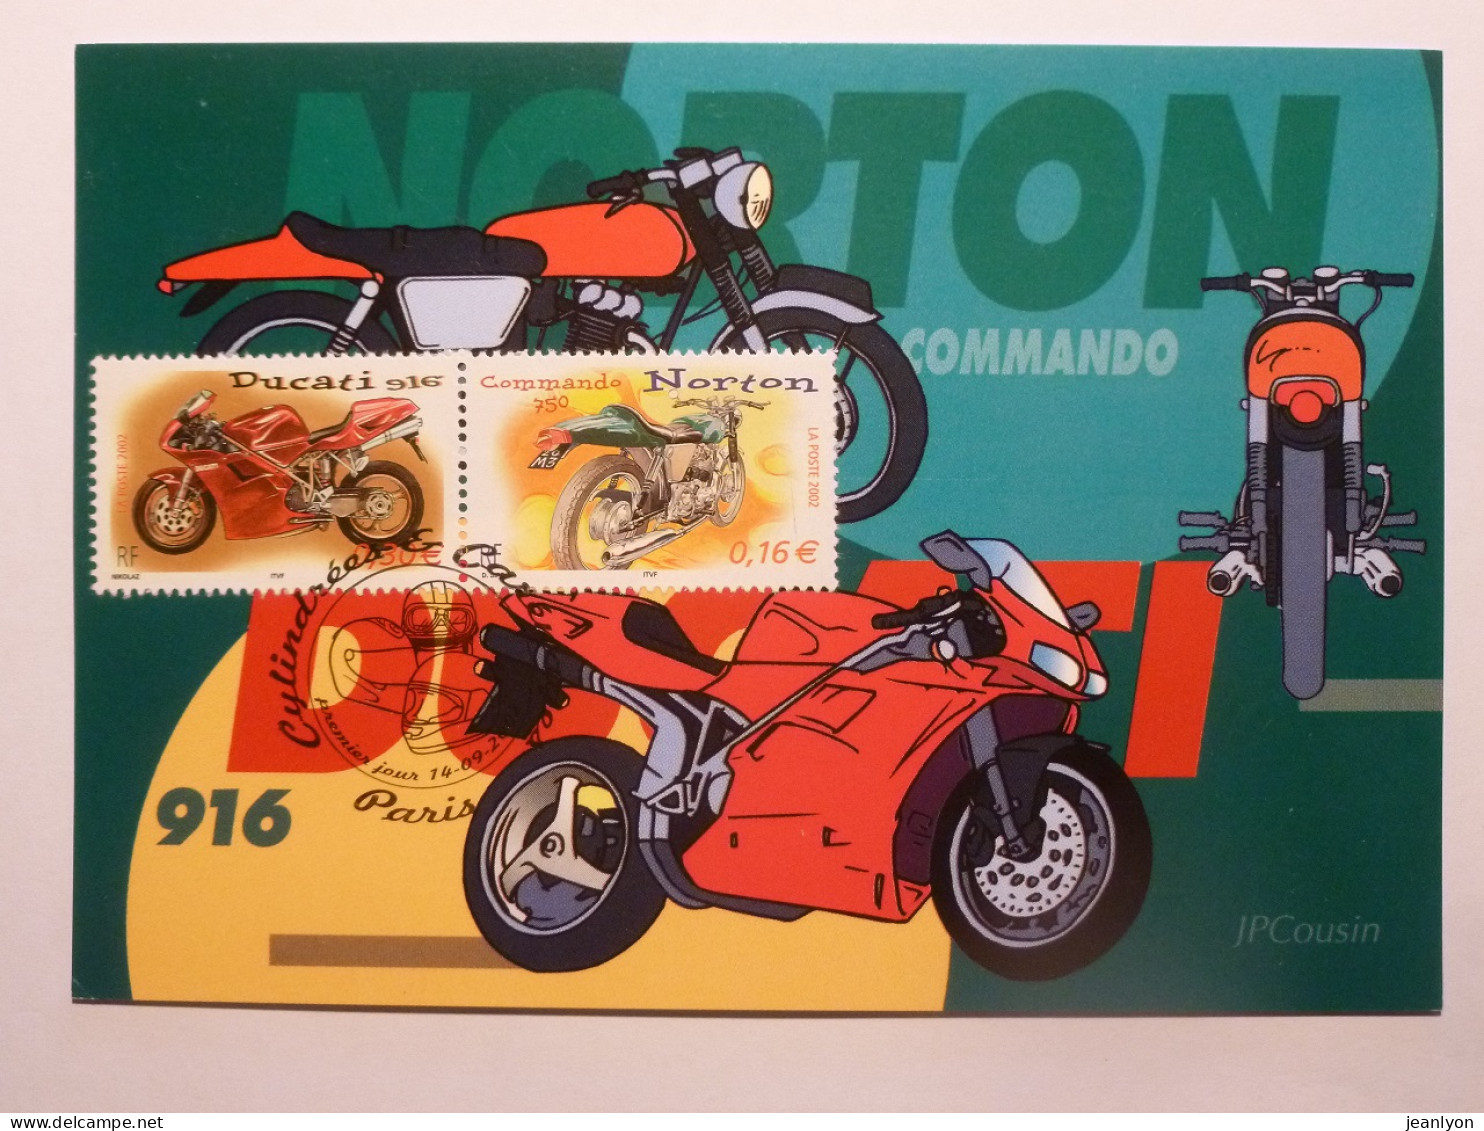 MOTOS - DUCATI 916 - NORTON COMMANDO 750 - Carte Philatélique 1er Jour Timbre Moto - Motorfietsen